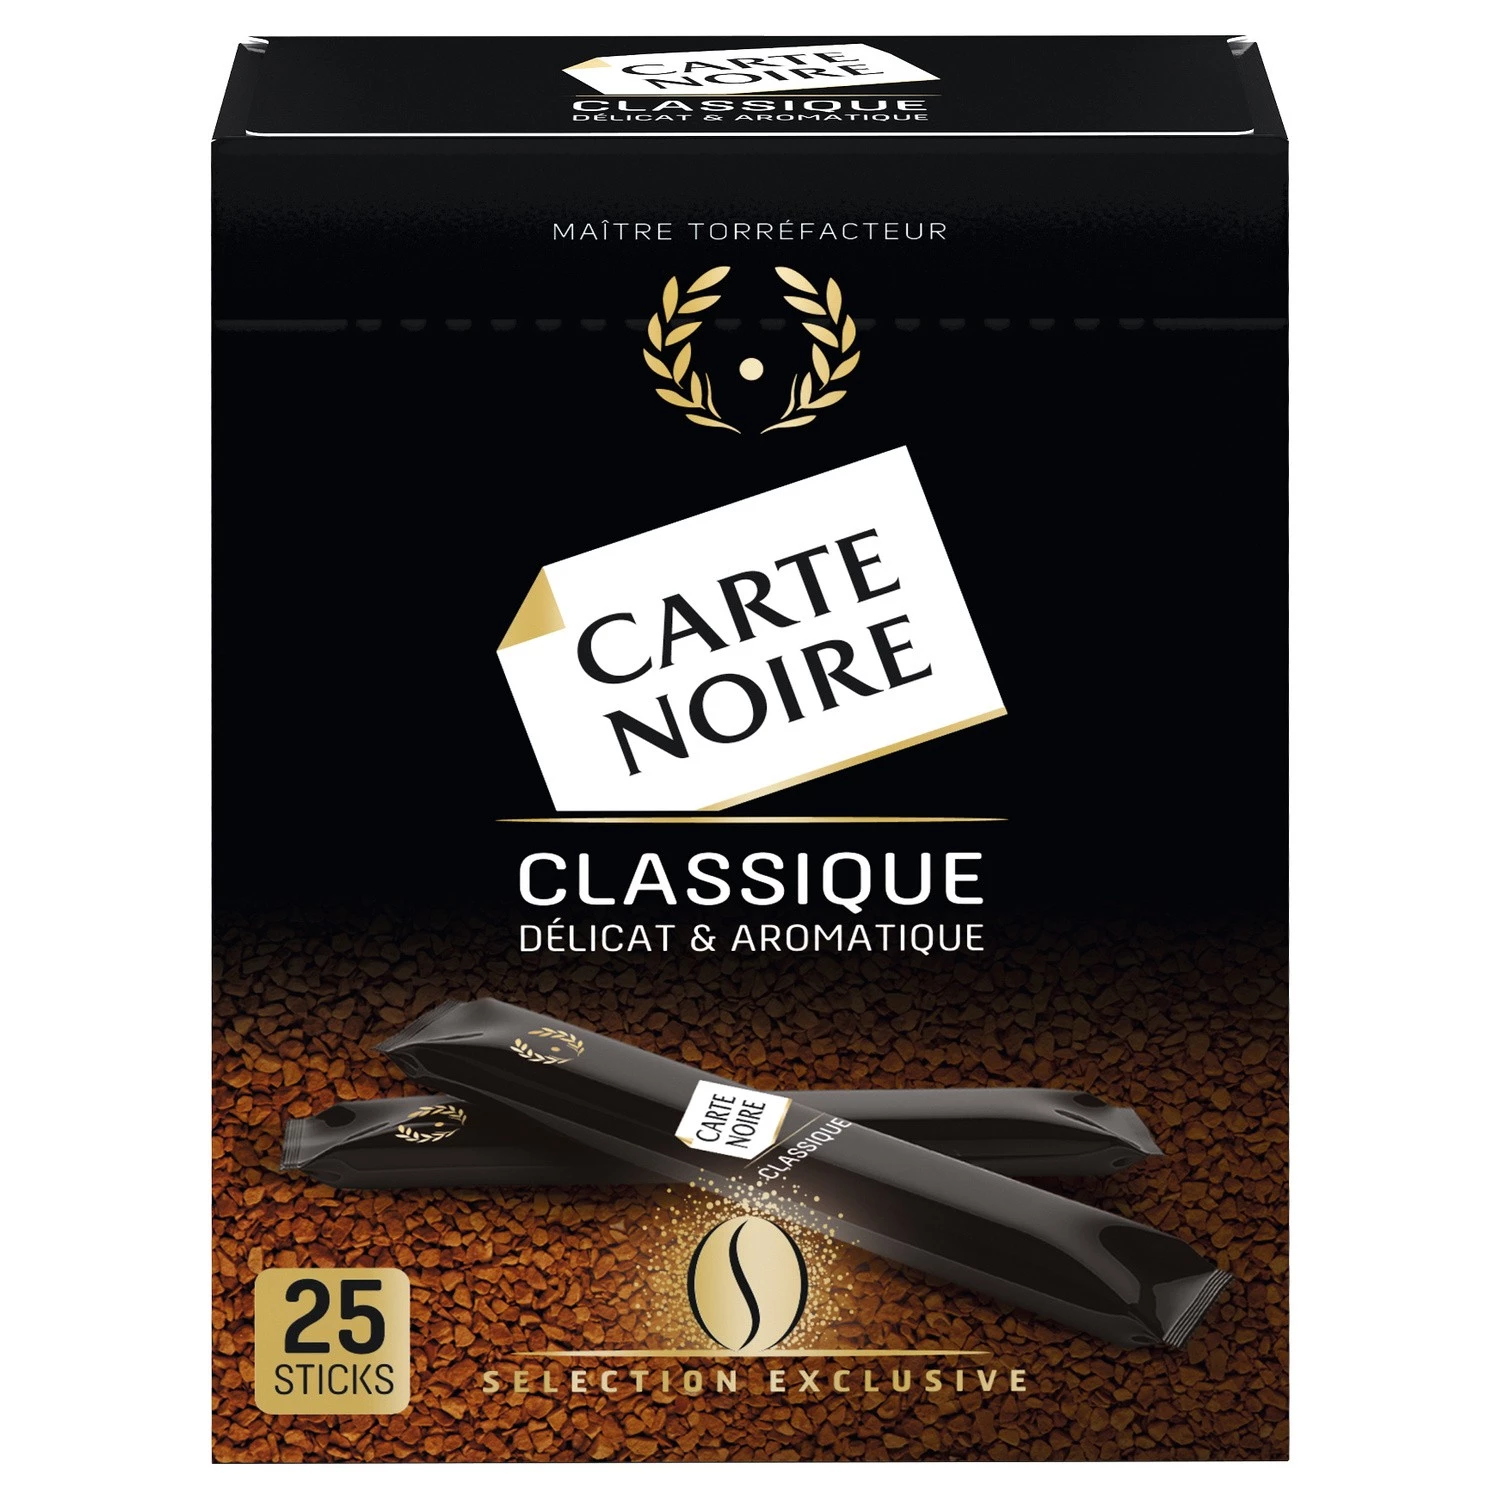 Classic soluble coffee x25 sticks 45g - CARTE NOIRE